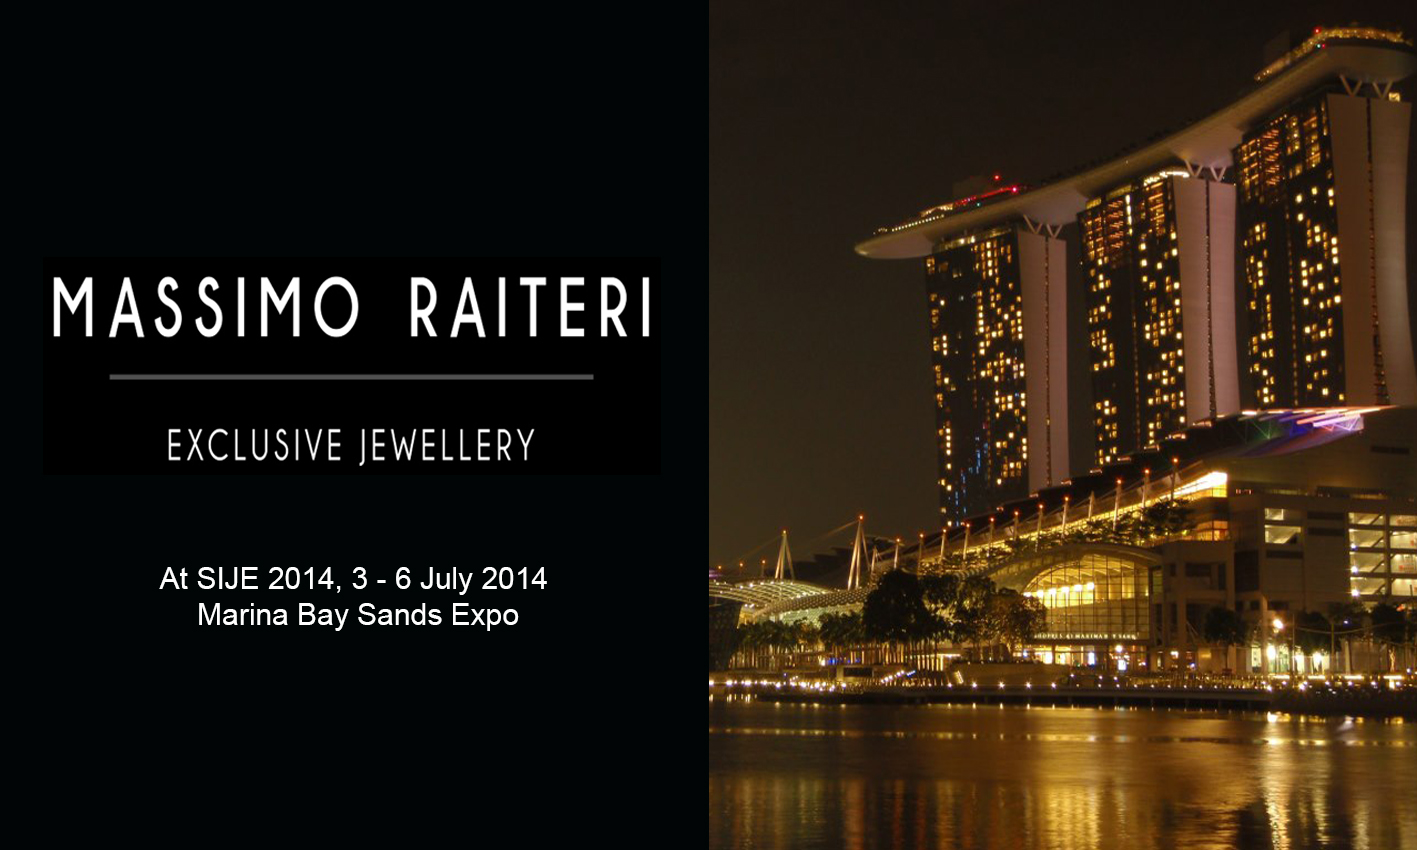 MASSIMO RAITERI EXHIBITS AT SINGAPORE INTERNATIONAL JEWELRY EXPO 2014